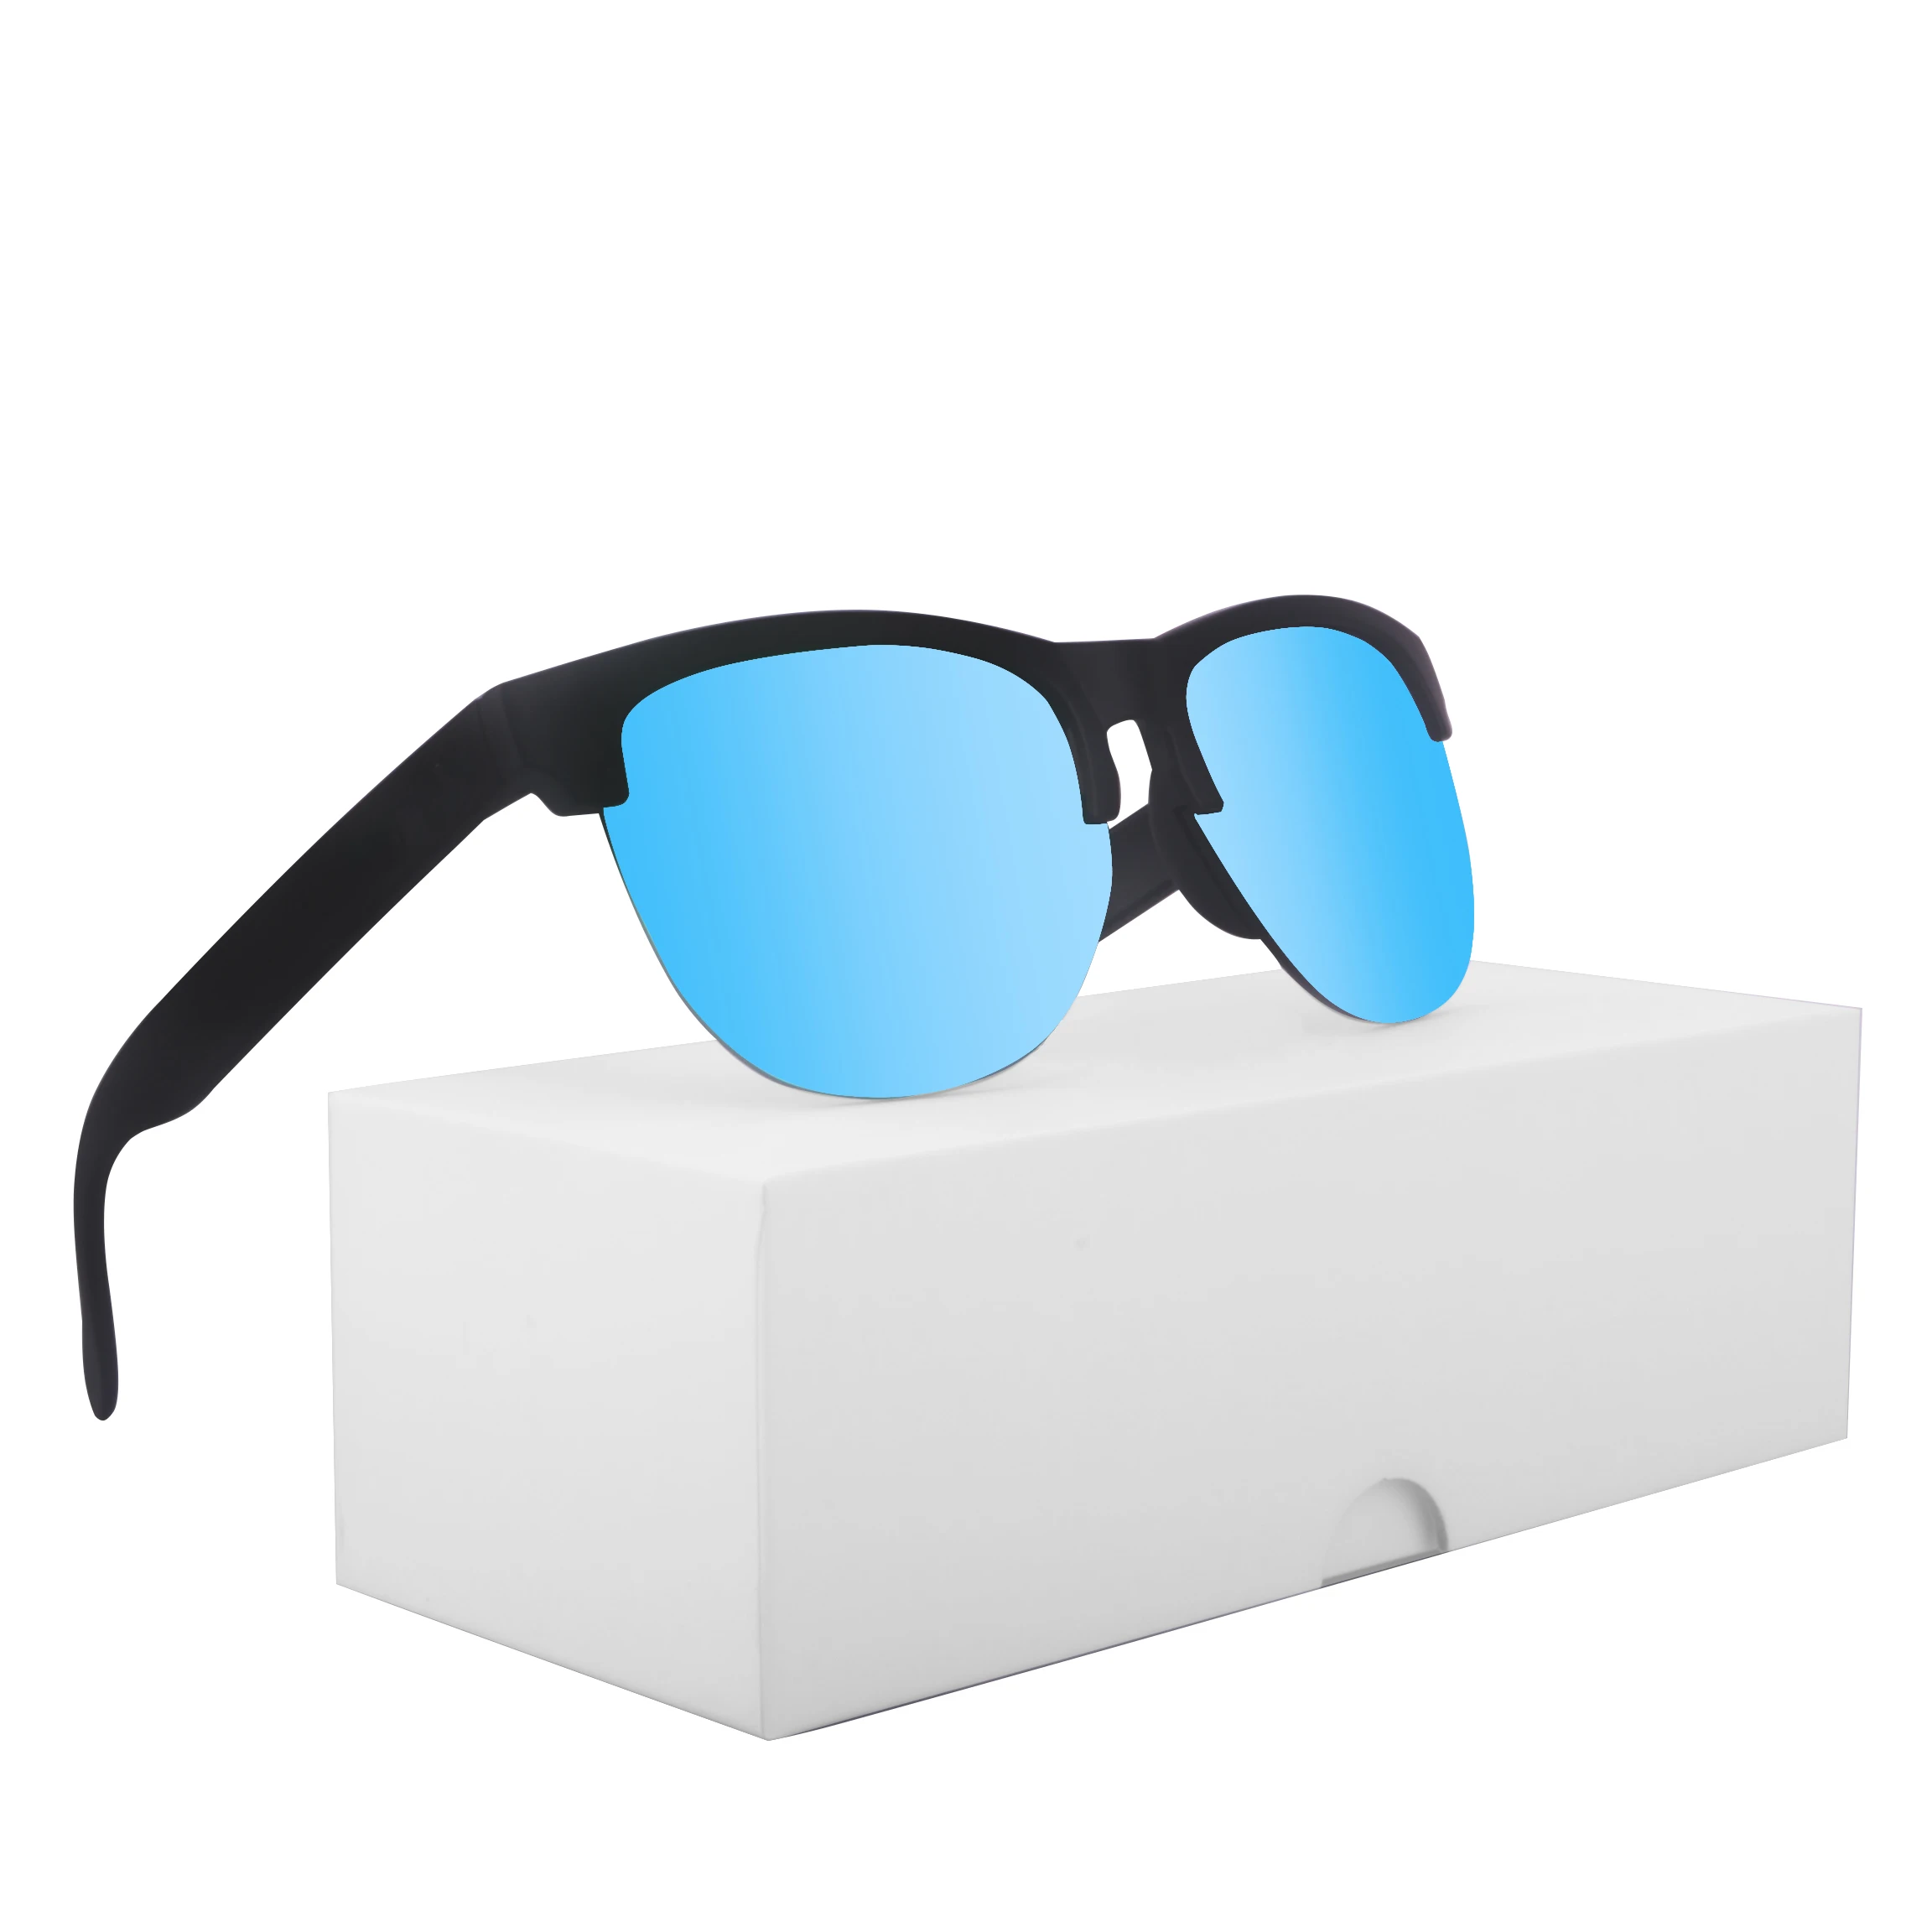 

2020 Factory Direct Low Moq Wholesale Premium Classic Pc Private Label Half Rim Sunglasses, More than 12 colors